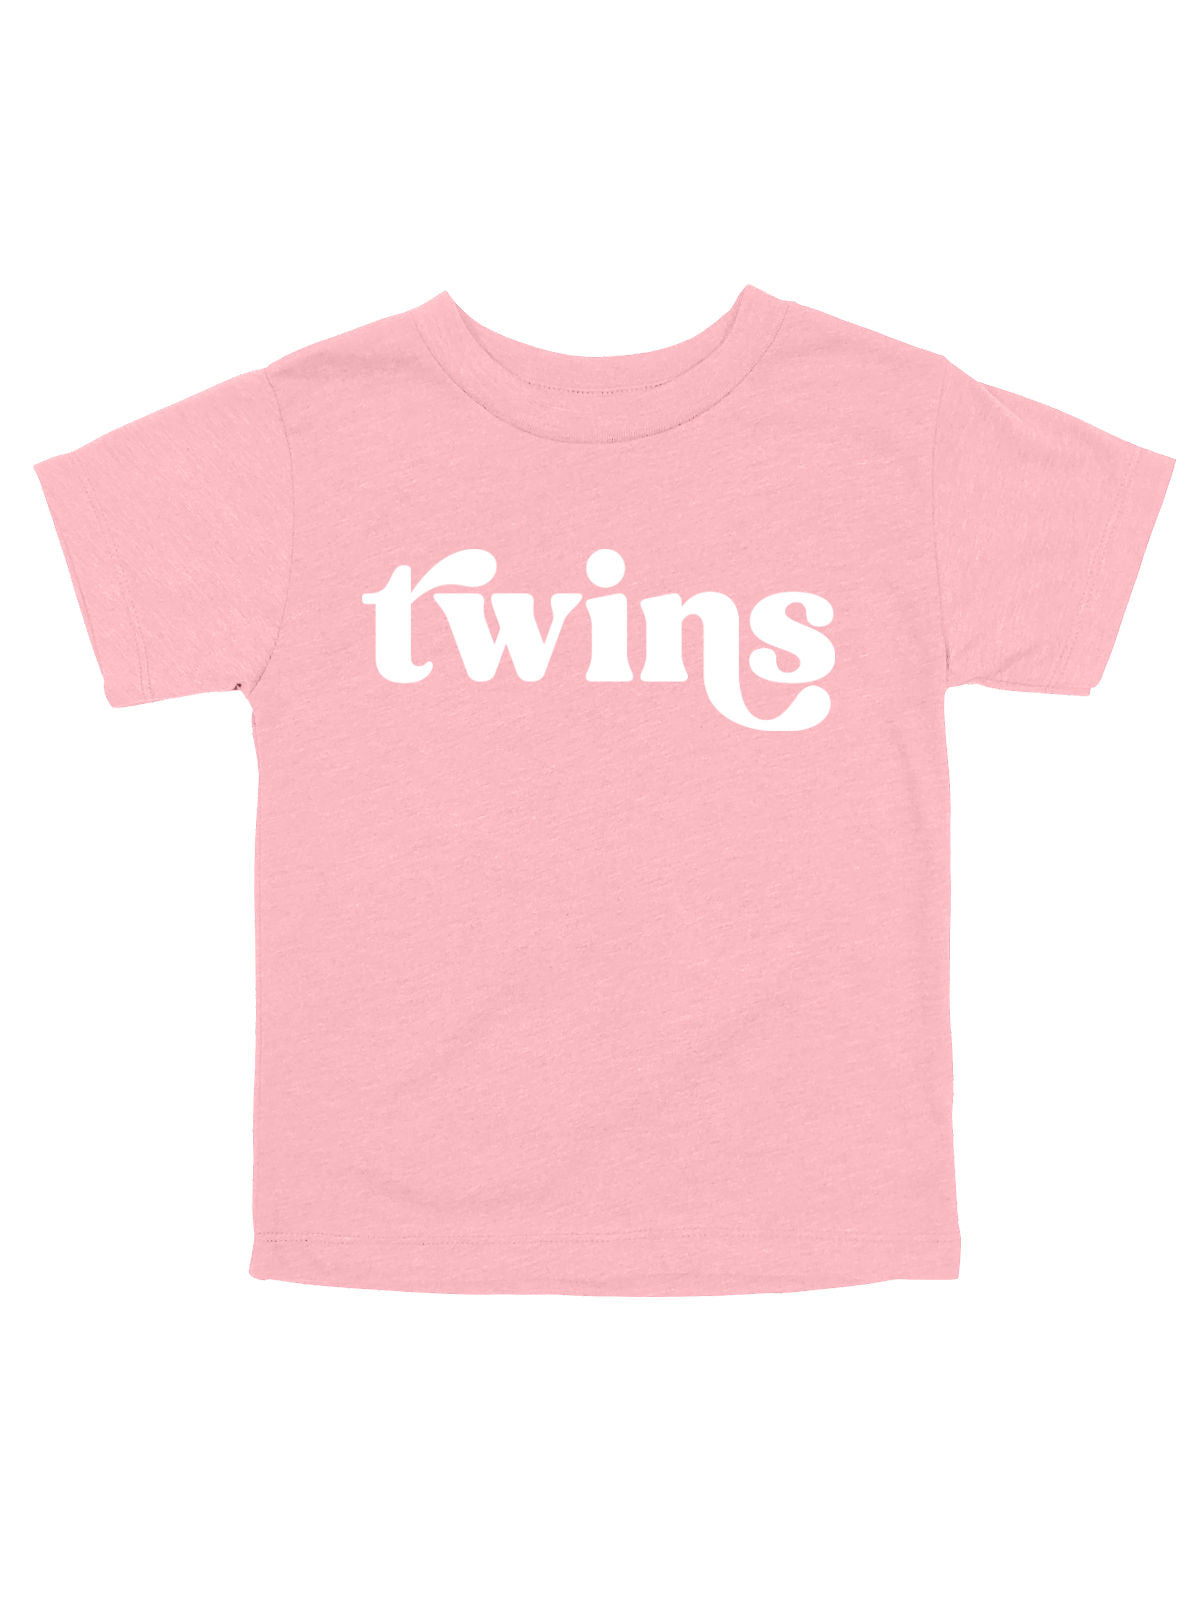 Kids Twins Shirt in Pink